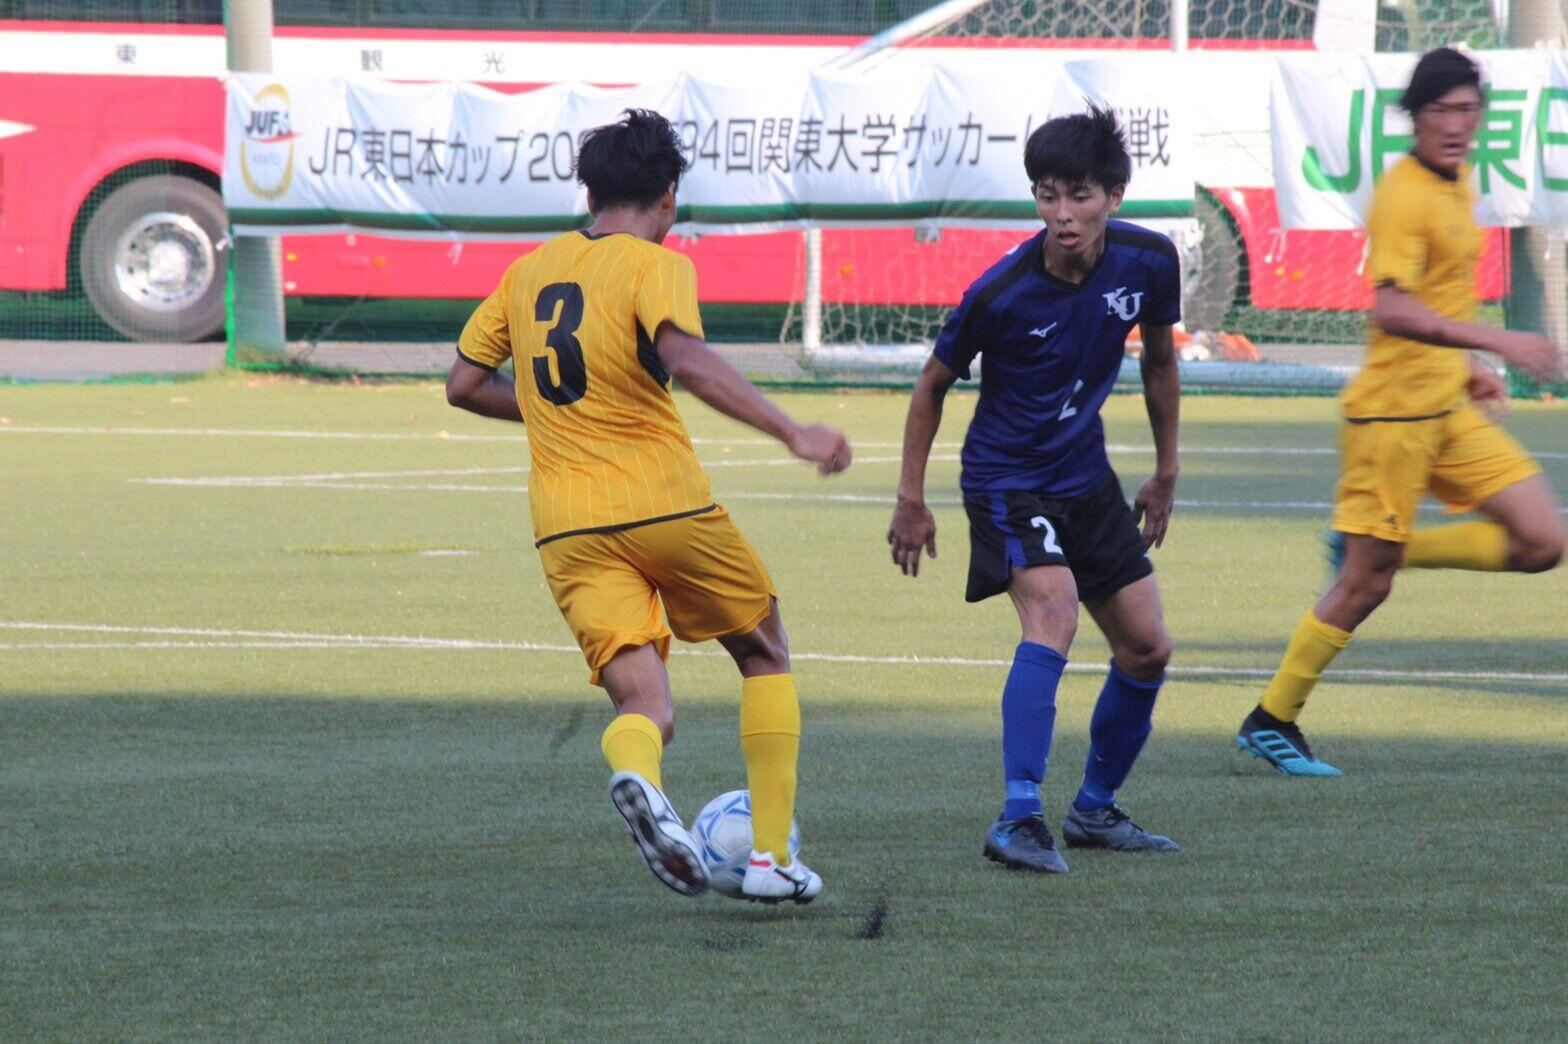 https://football.ku-sports.jp/blog/photoreport/images/20200831201312.jpg